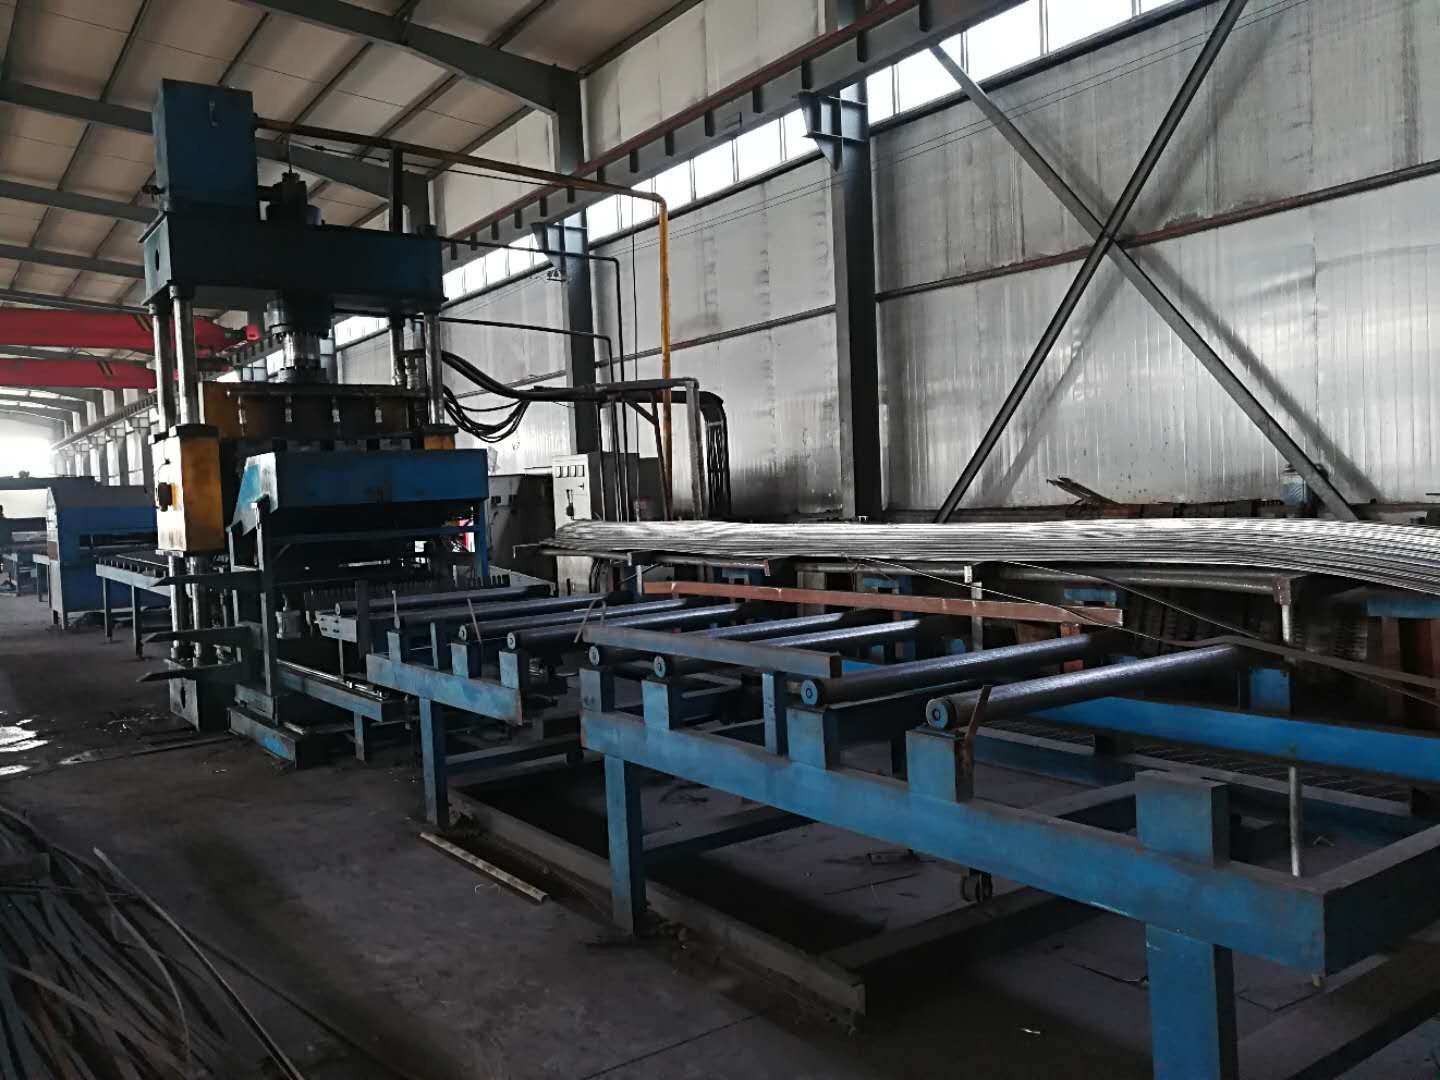 China 6m Cross Bar CNC 50mm Steel Grating Welding Machine , Steel Plate Welding Machine on sale